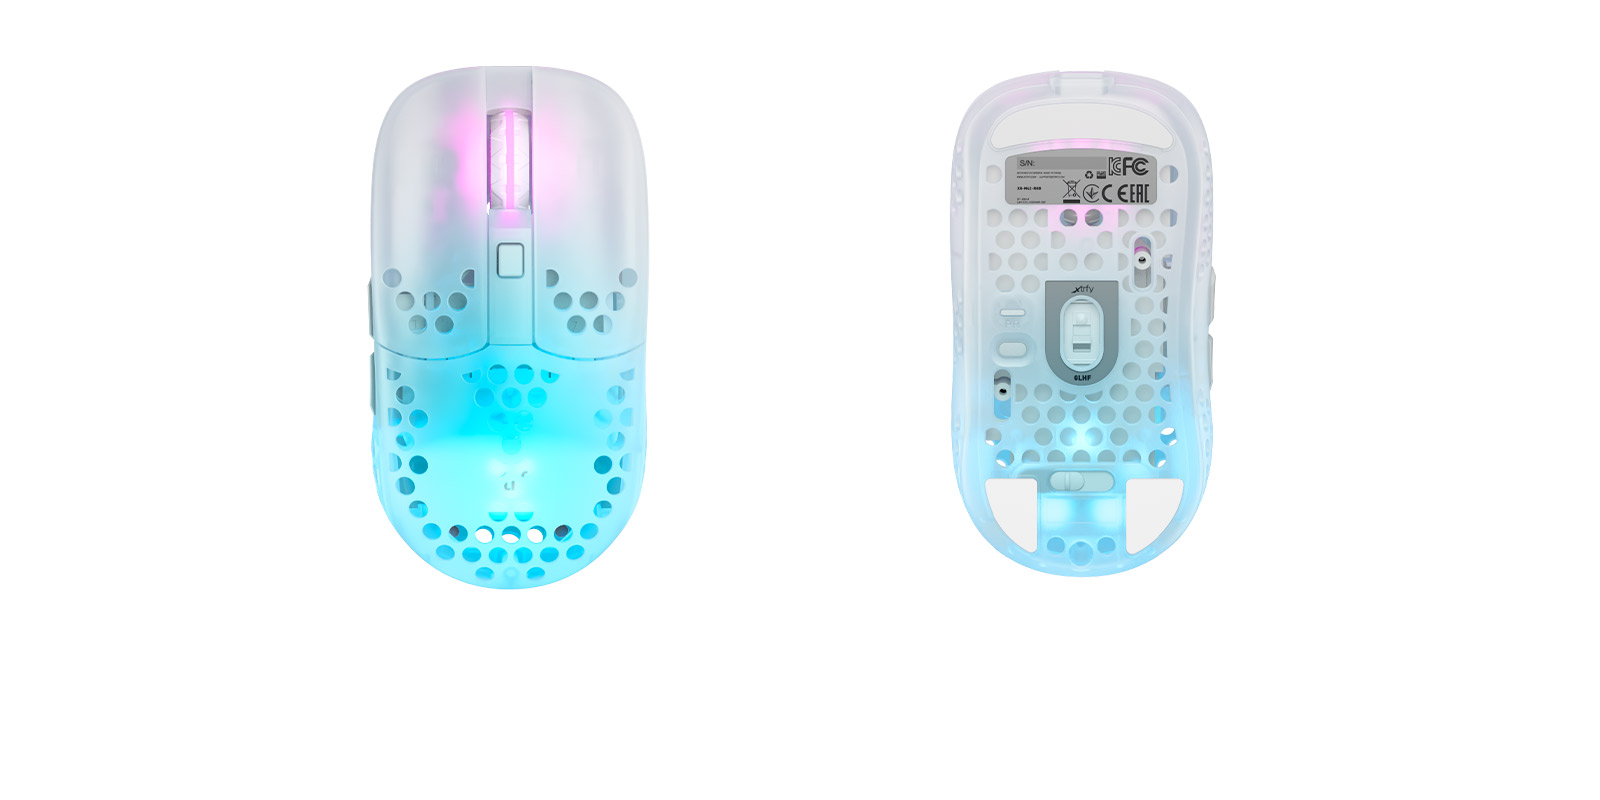 008-MZ1-White-Wireless-Gaming-Mouse_Hero.jpg